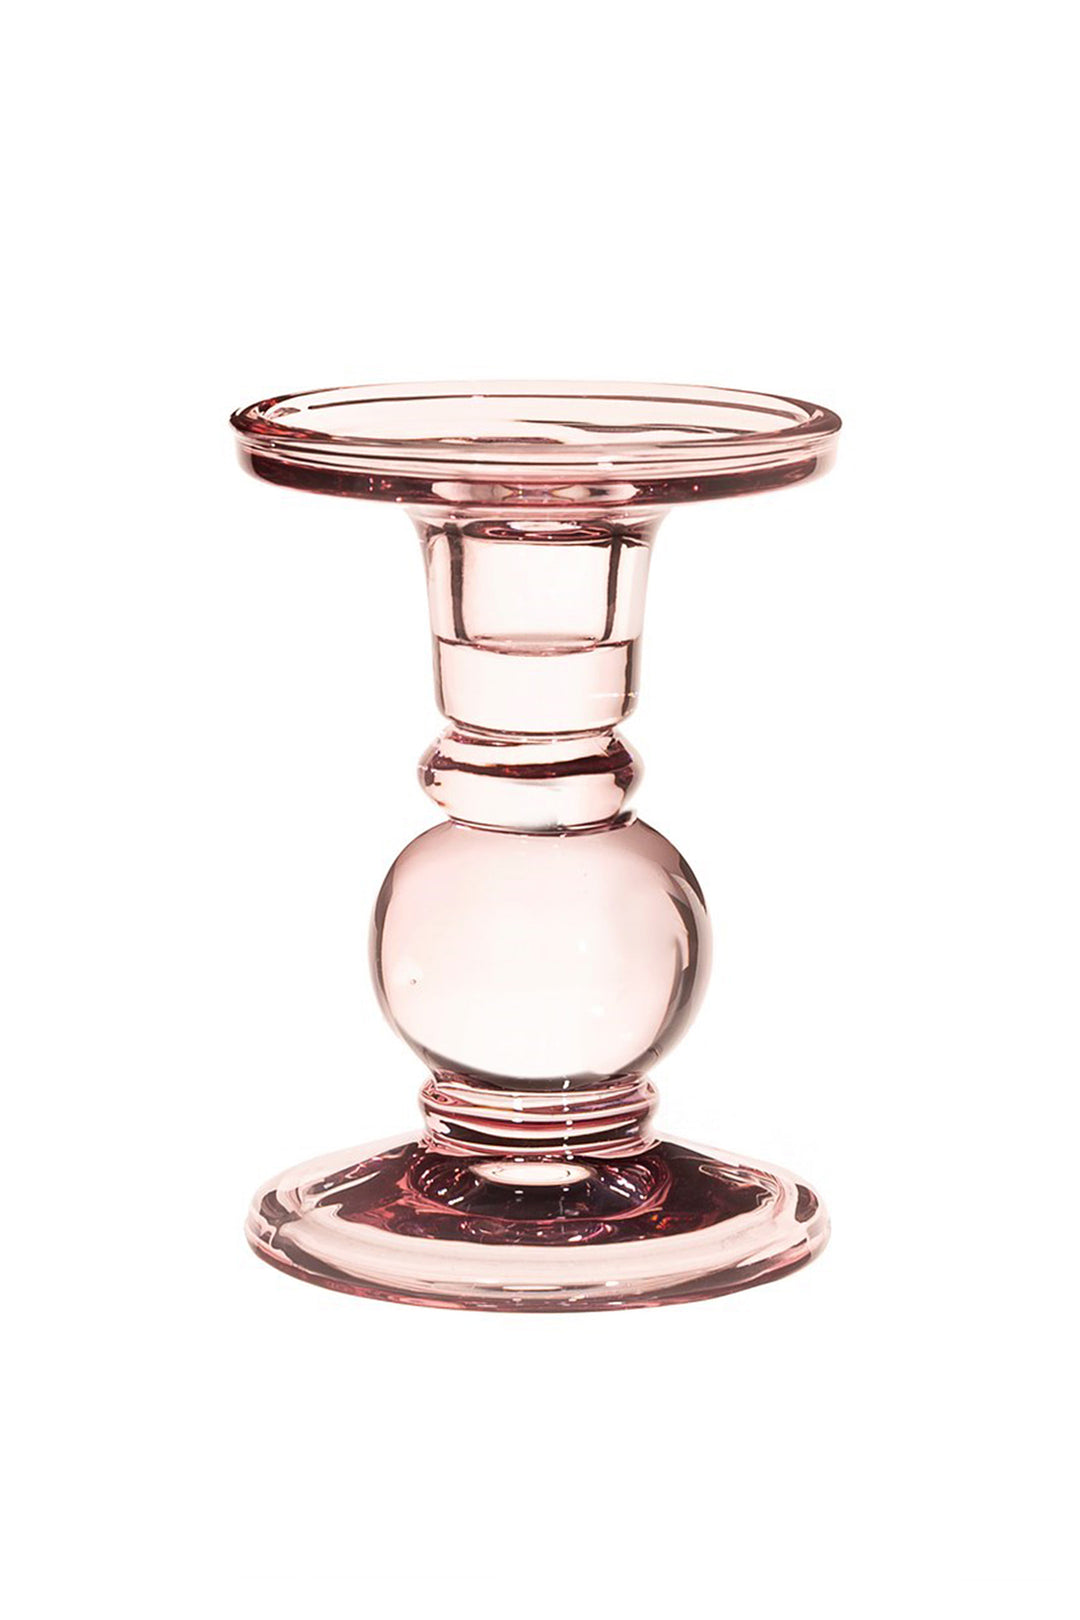 Estelle Glass Candle Holder Pink